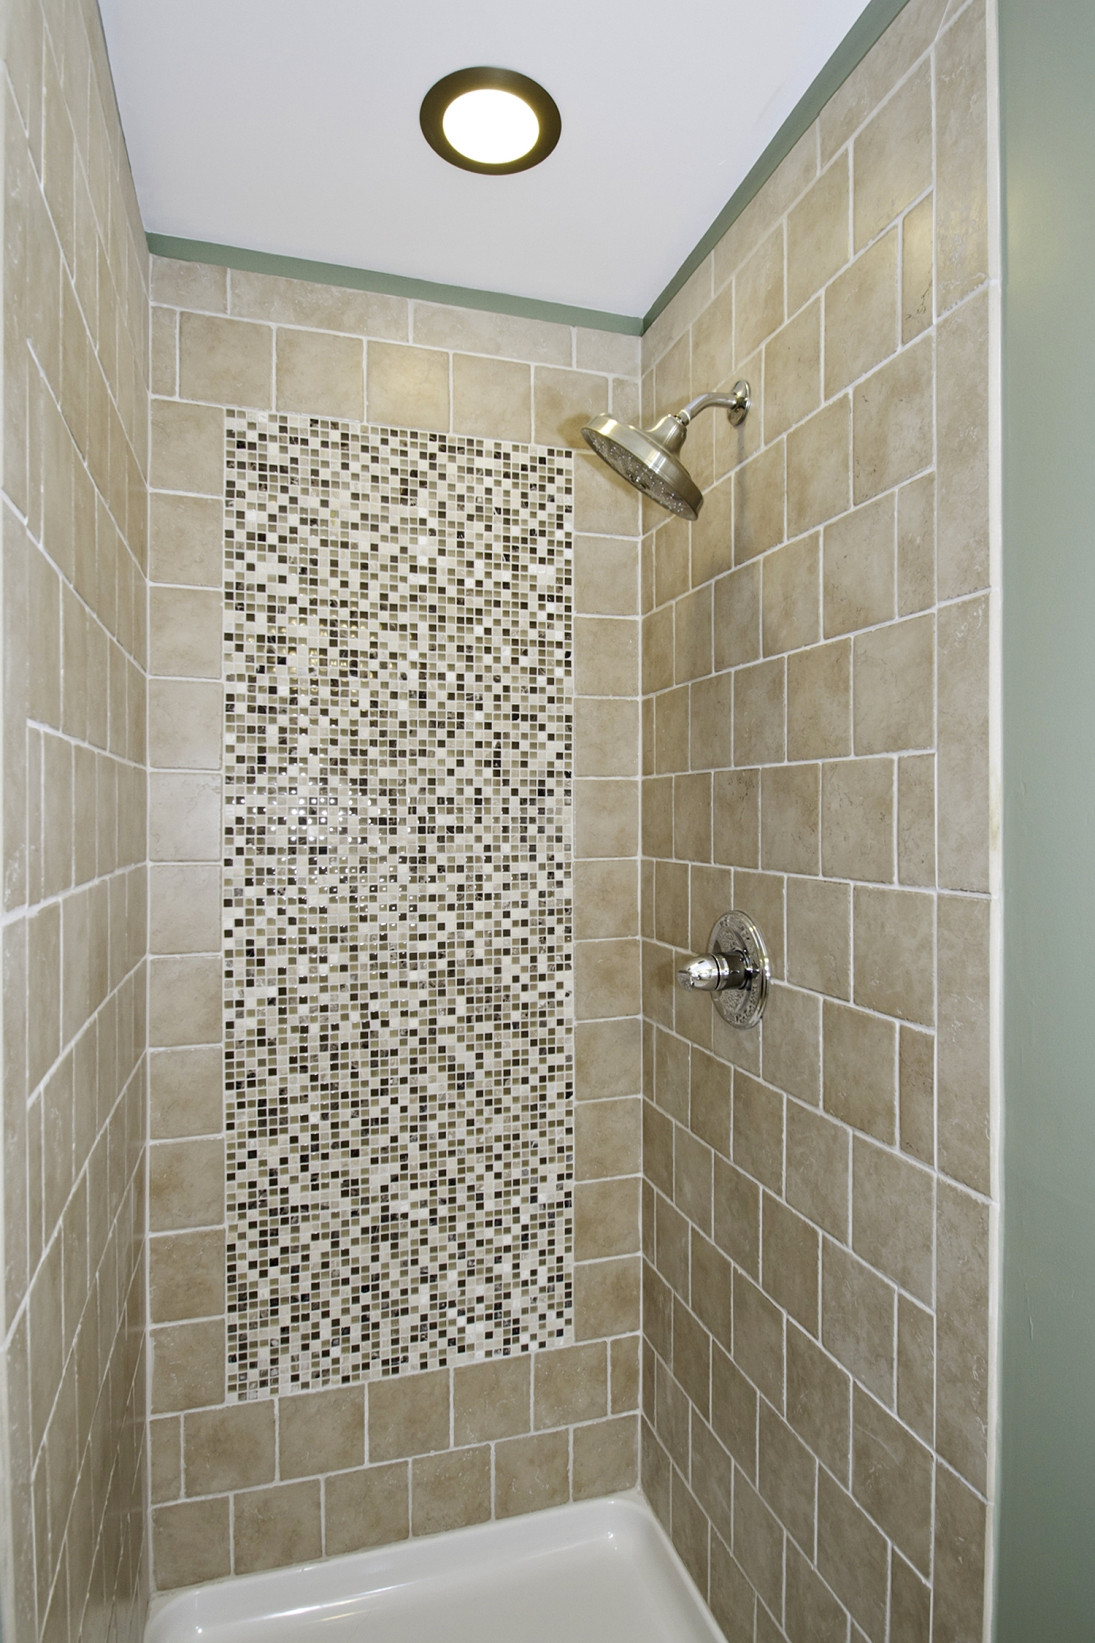 Home Depot Bathroom Shower Tile
 Bathroom Tiled Shower Ideas You Can Install For Your